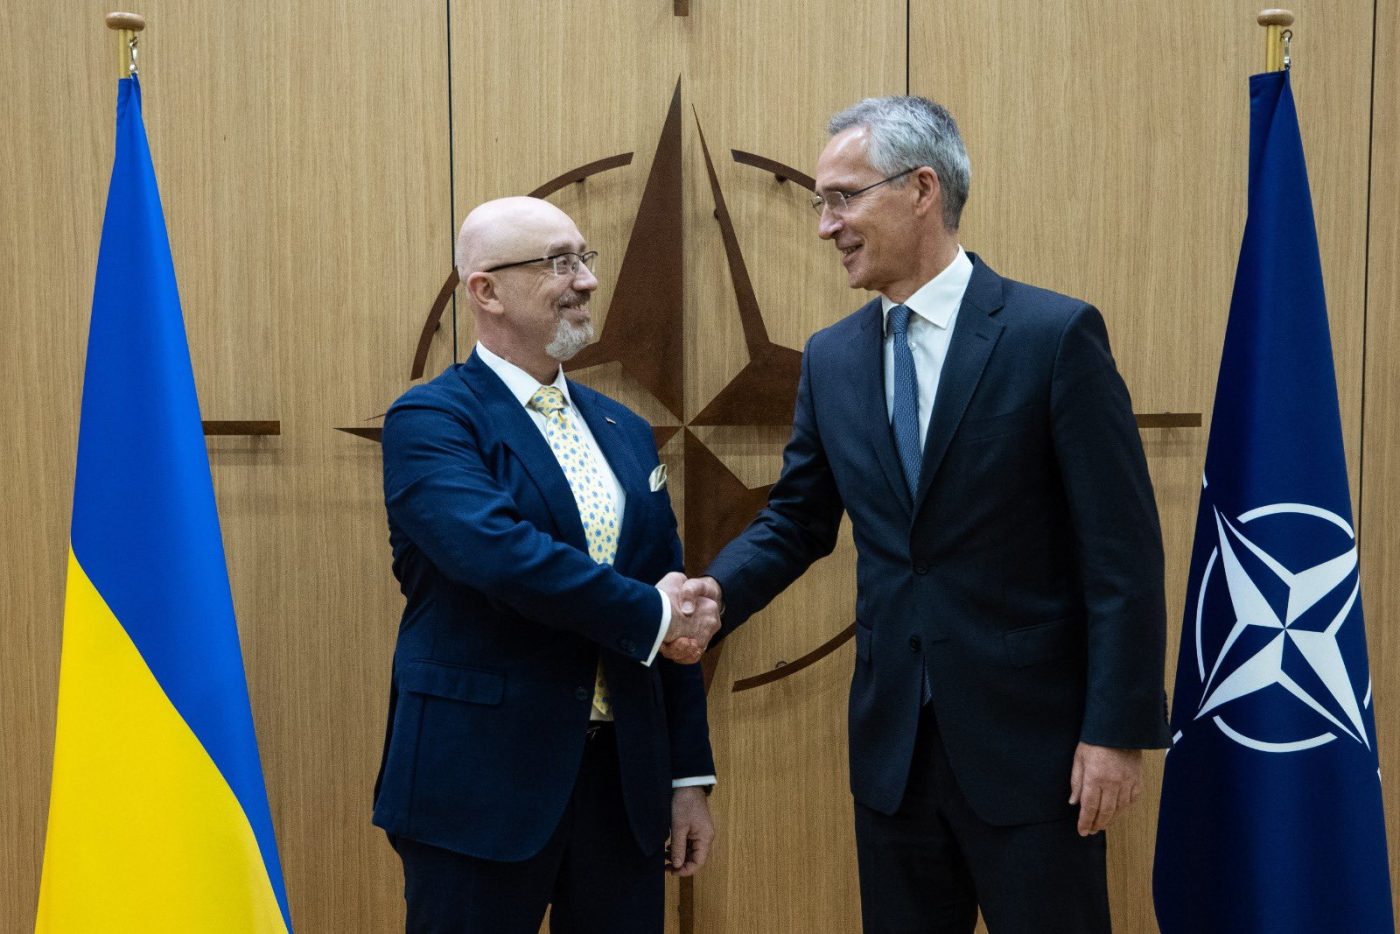 Photo: NATO Secretary General Jens Stoltenberg and Ukrainian Defence Minister Oleksii Reznikov. Credit: @jensstoltenberg via Twitter https://twitter.com/jensstoltenberg/status/1580275079262322691/photo/1